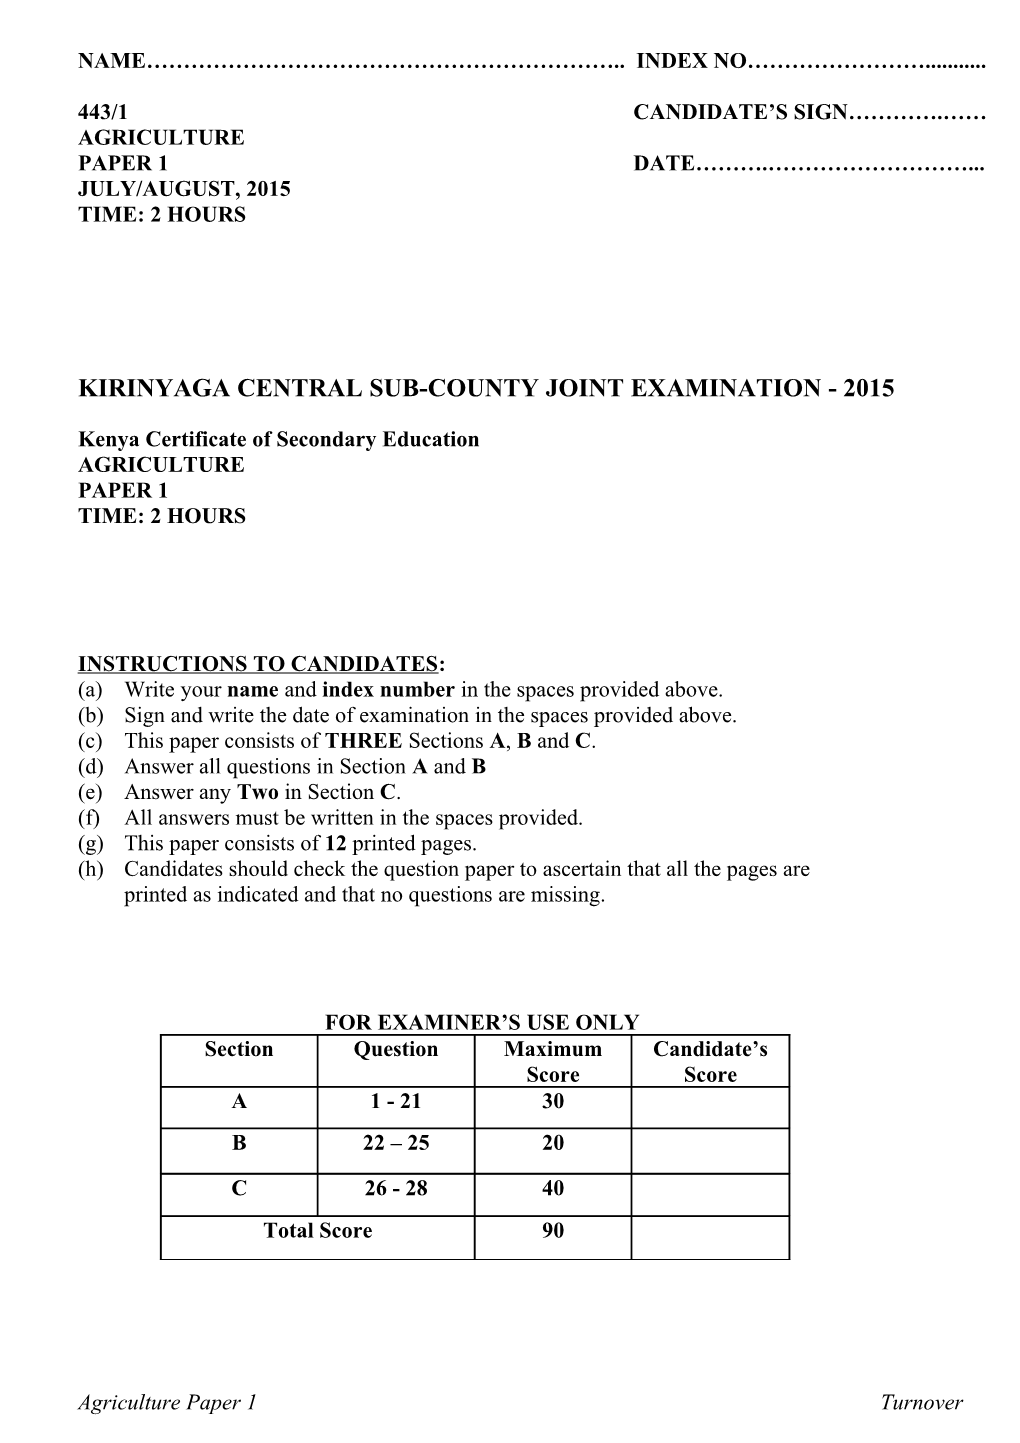 Kirinyaga Central Sub-County Joint Examination - 2015